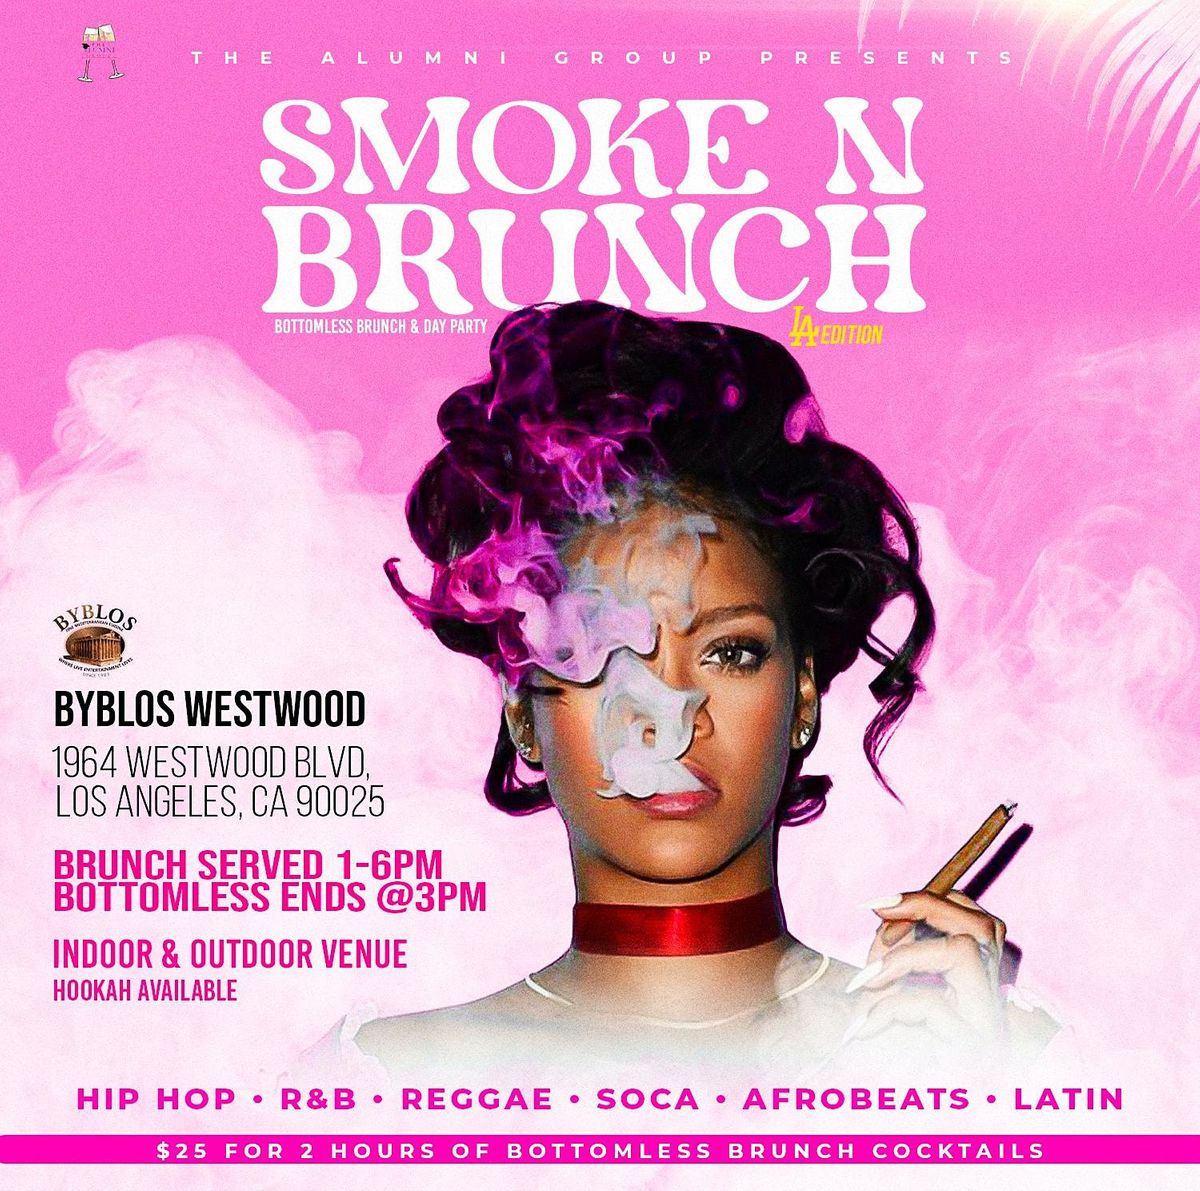 Smoke & Brunch - L.A. Bottomless Brunch & Day Party